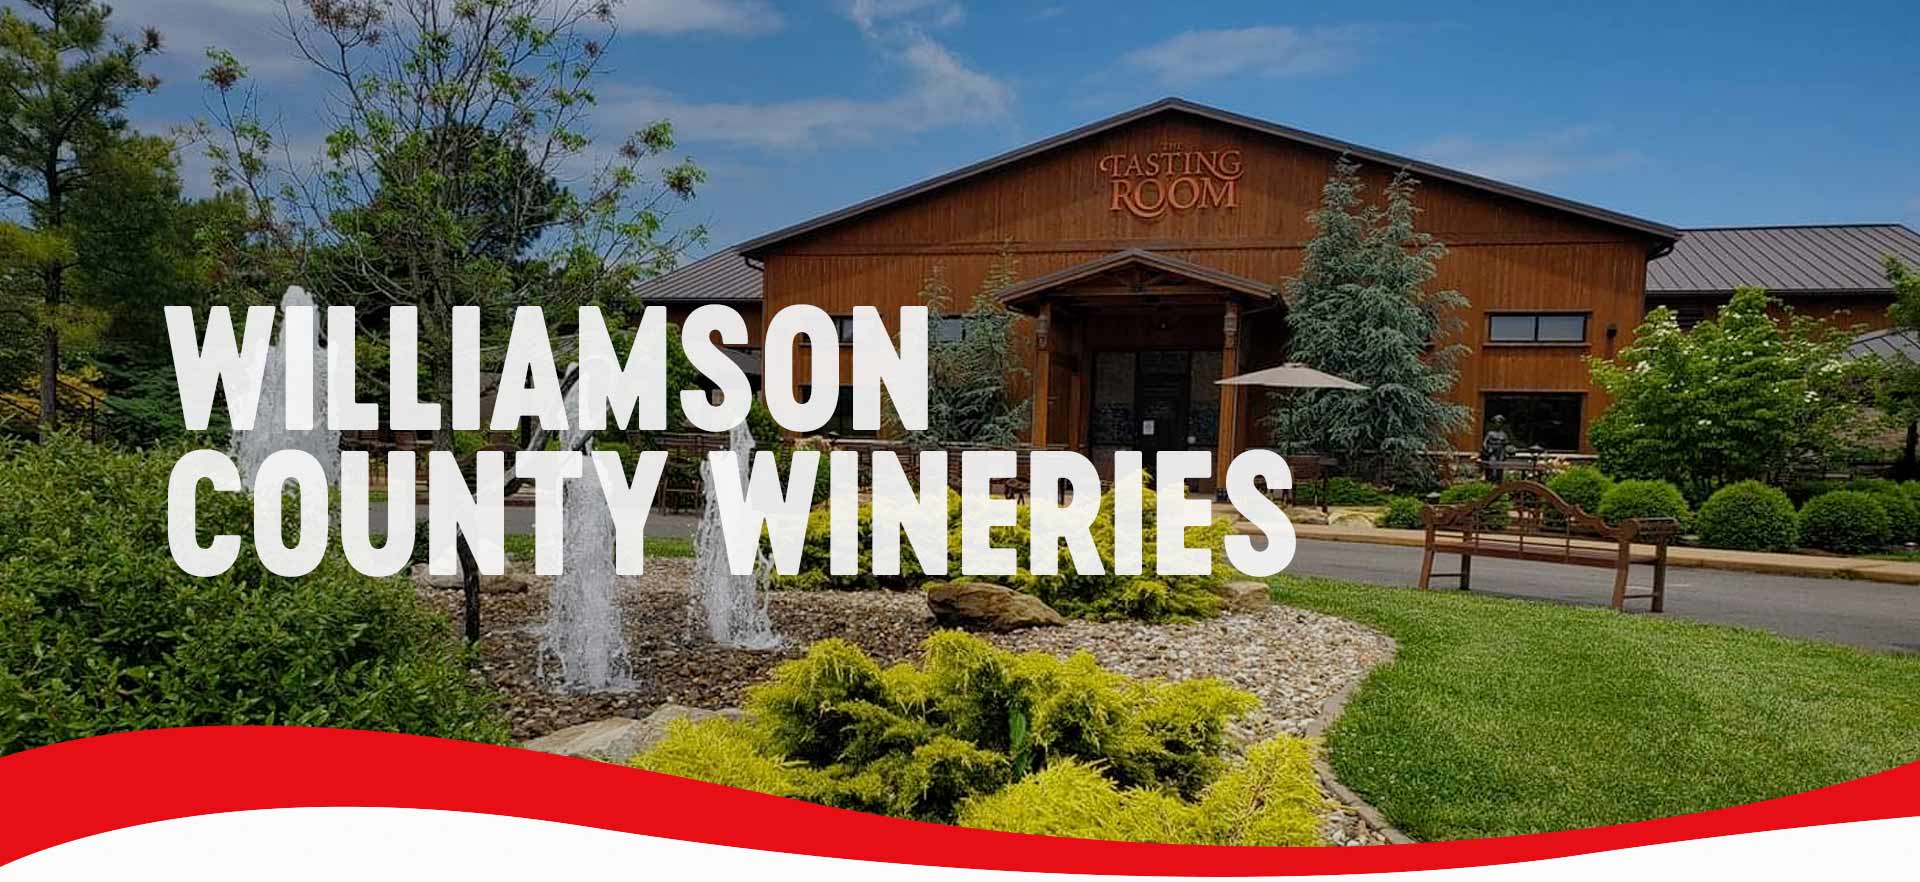 williamson county wineries header